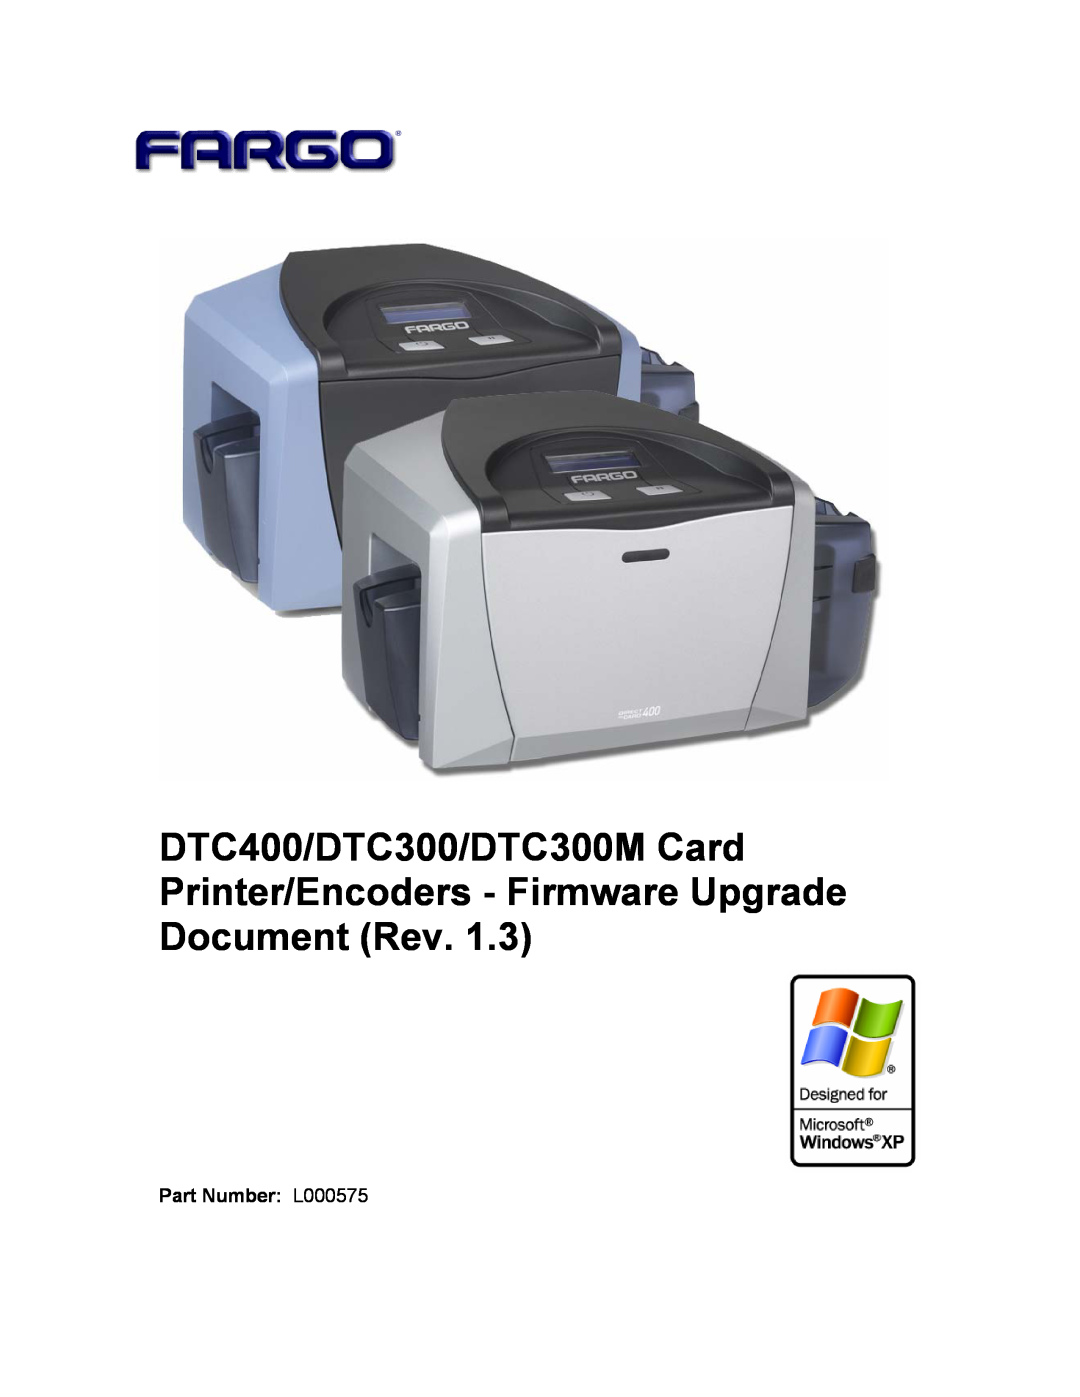 FARGO electronic manual DTC400/DTC300/DTC300M Card, Printer/Encoders - Firmware Upgrade Document Rev 